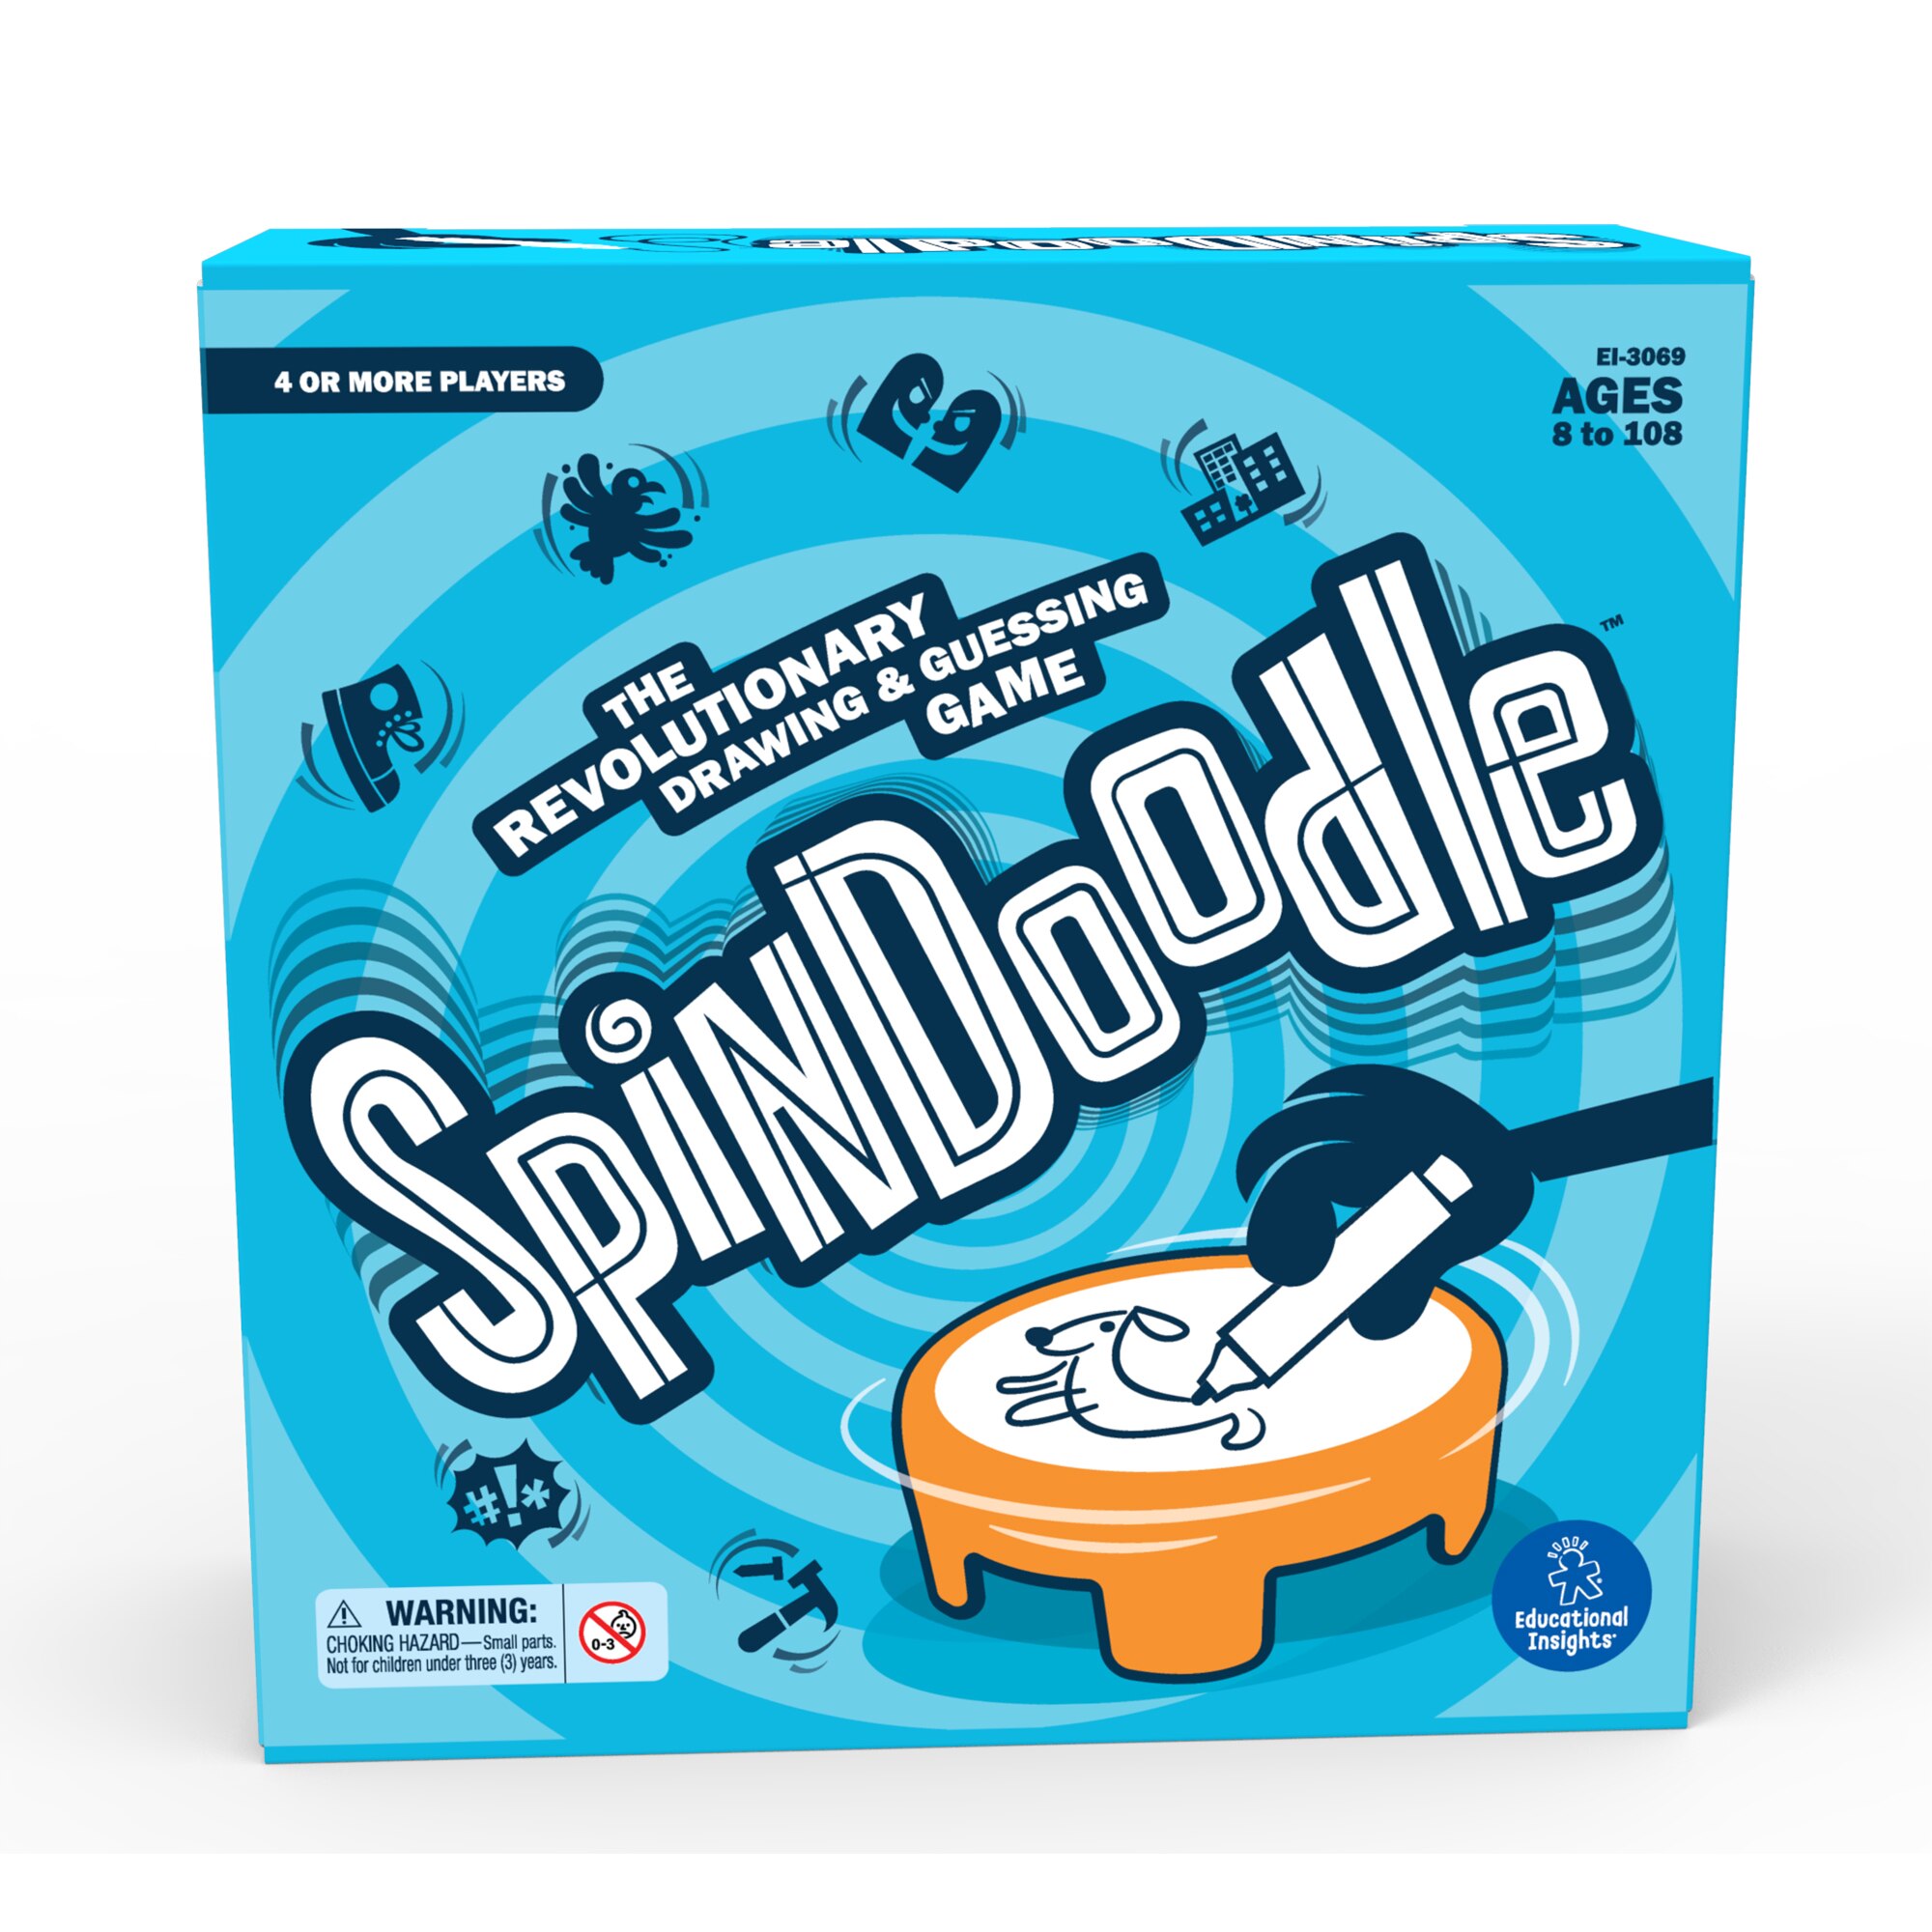 Spindoodle Game